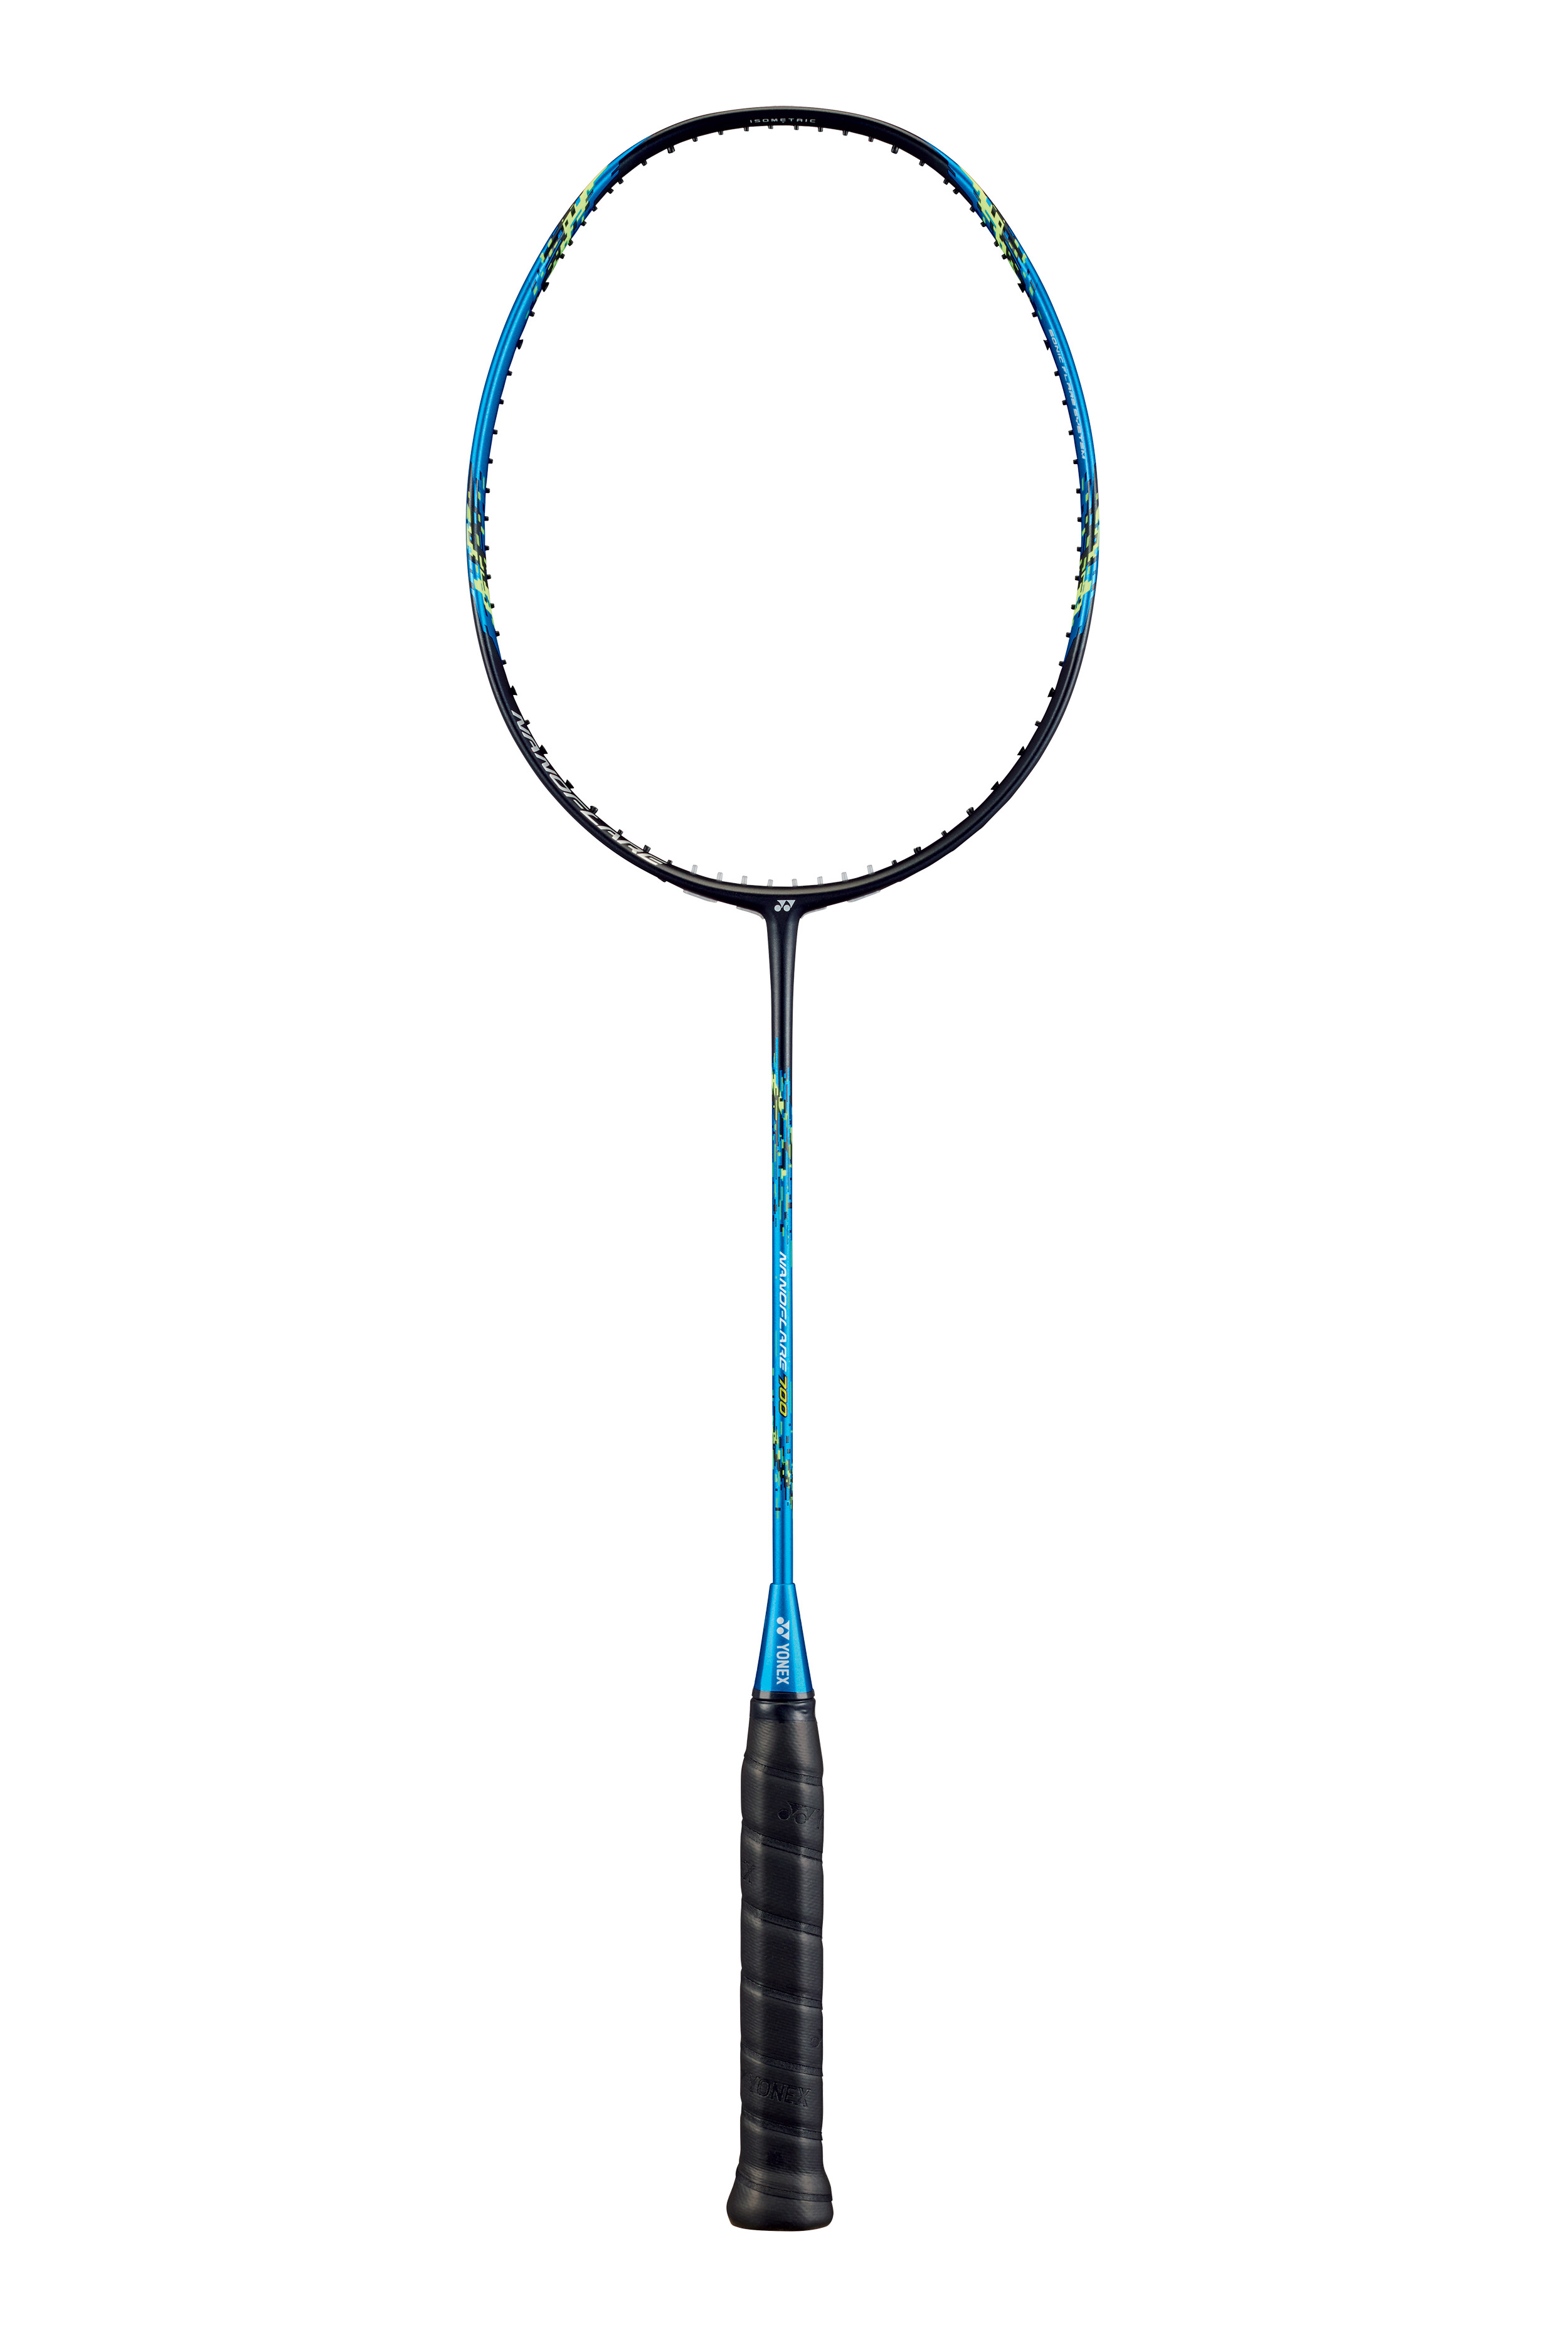 YONEX Nanoflare 700 Badminton Racquet 4UG5 NF700 Unstrung Made in Japan